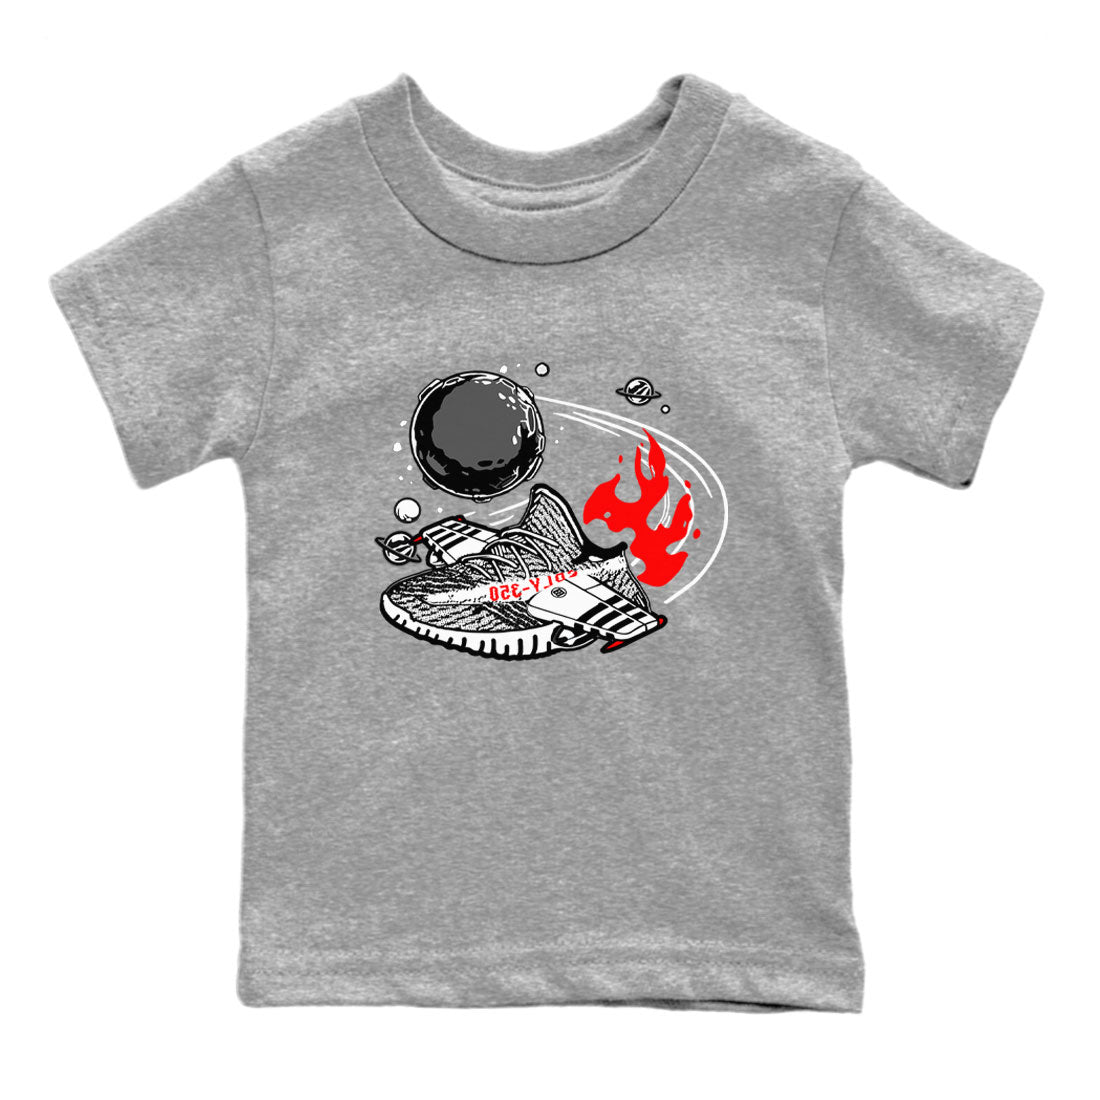 Yeezy 350 Zebra shirt to match Yeezys Rocket Boost Streetwear Sneaker Shirt Yeezy Boost 350 V2 Zebra Drip Gear Zone Sneaker Matching Clothing Baby Toddler Heather Grey 2 T-Shirt